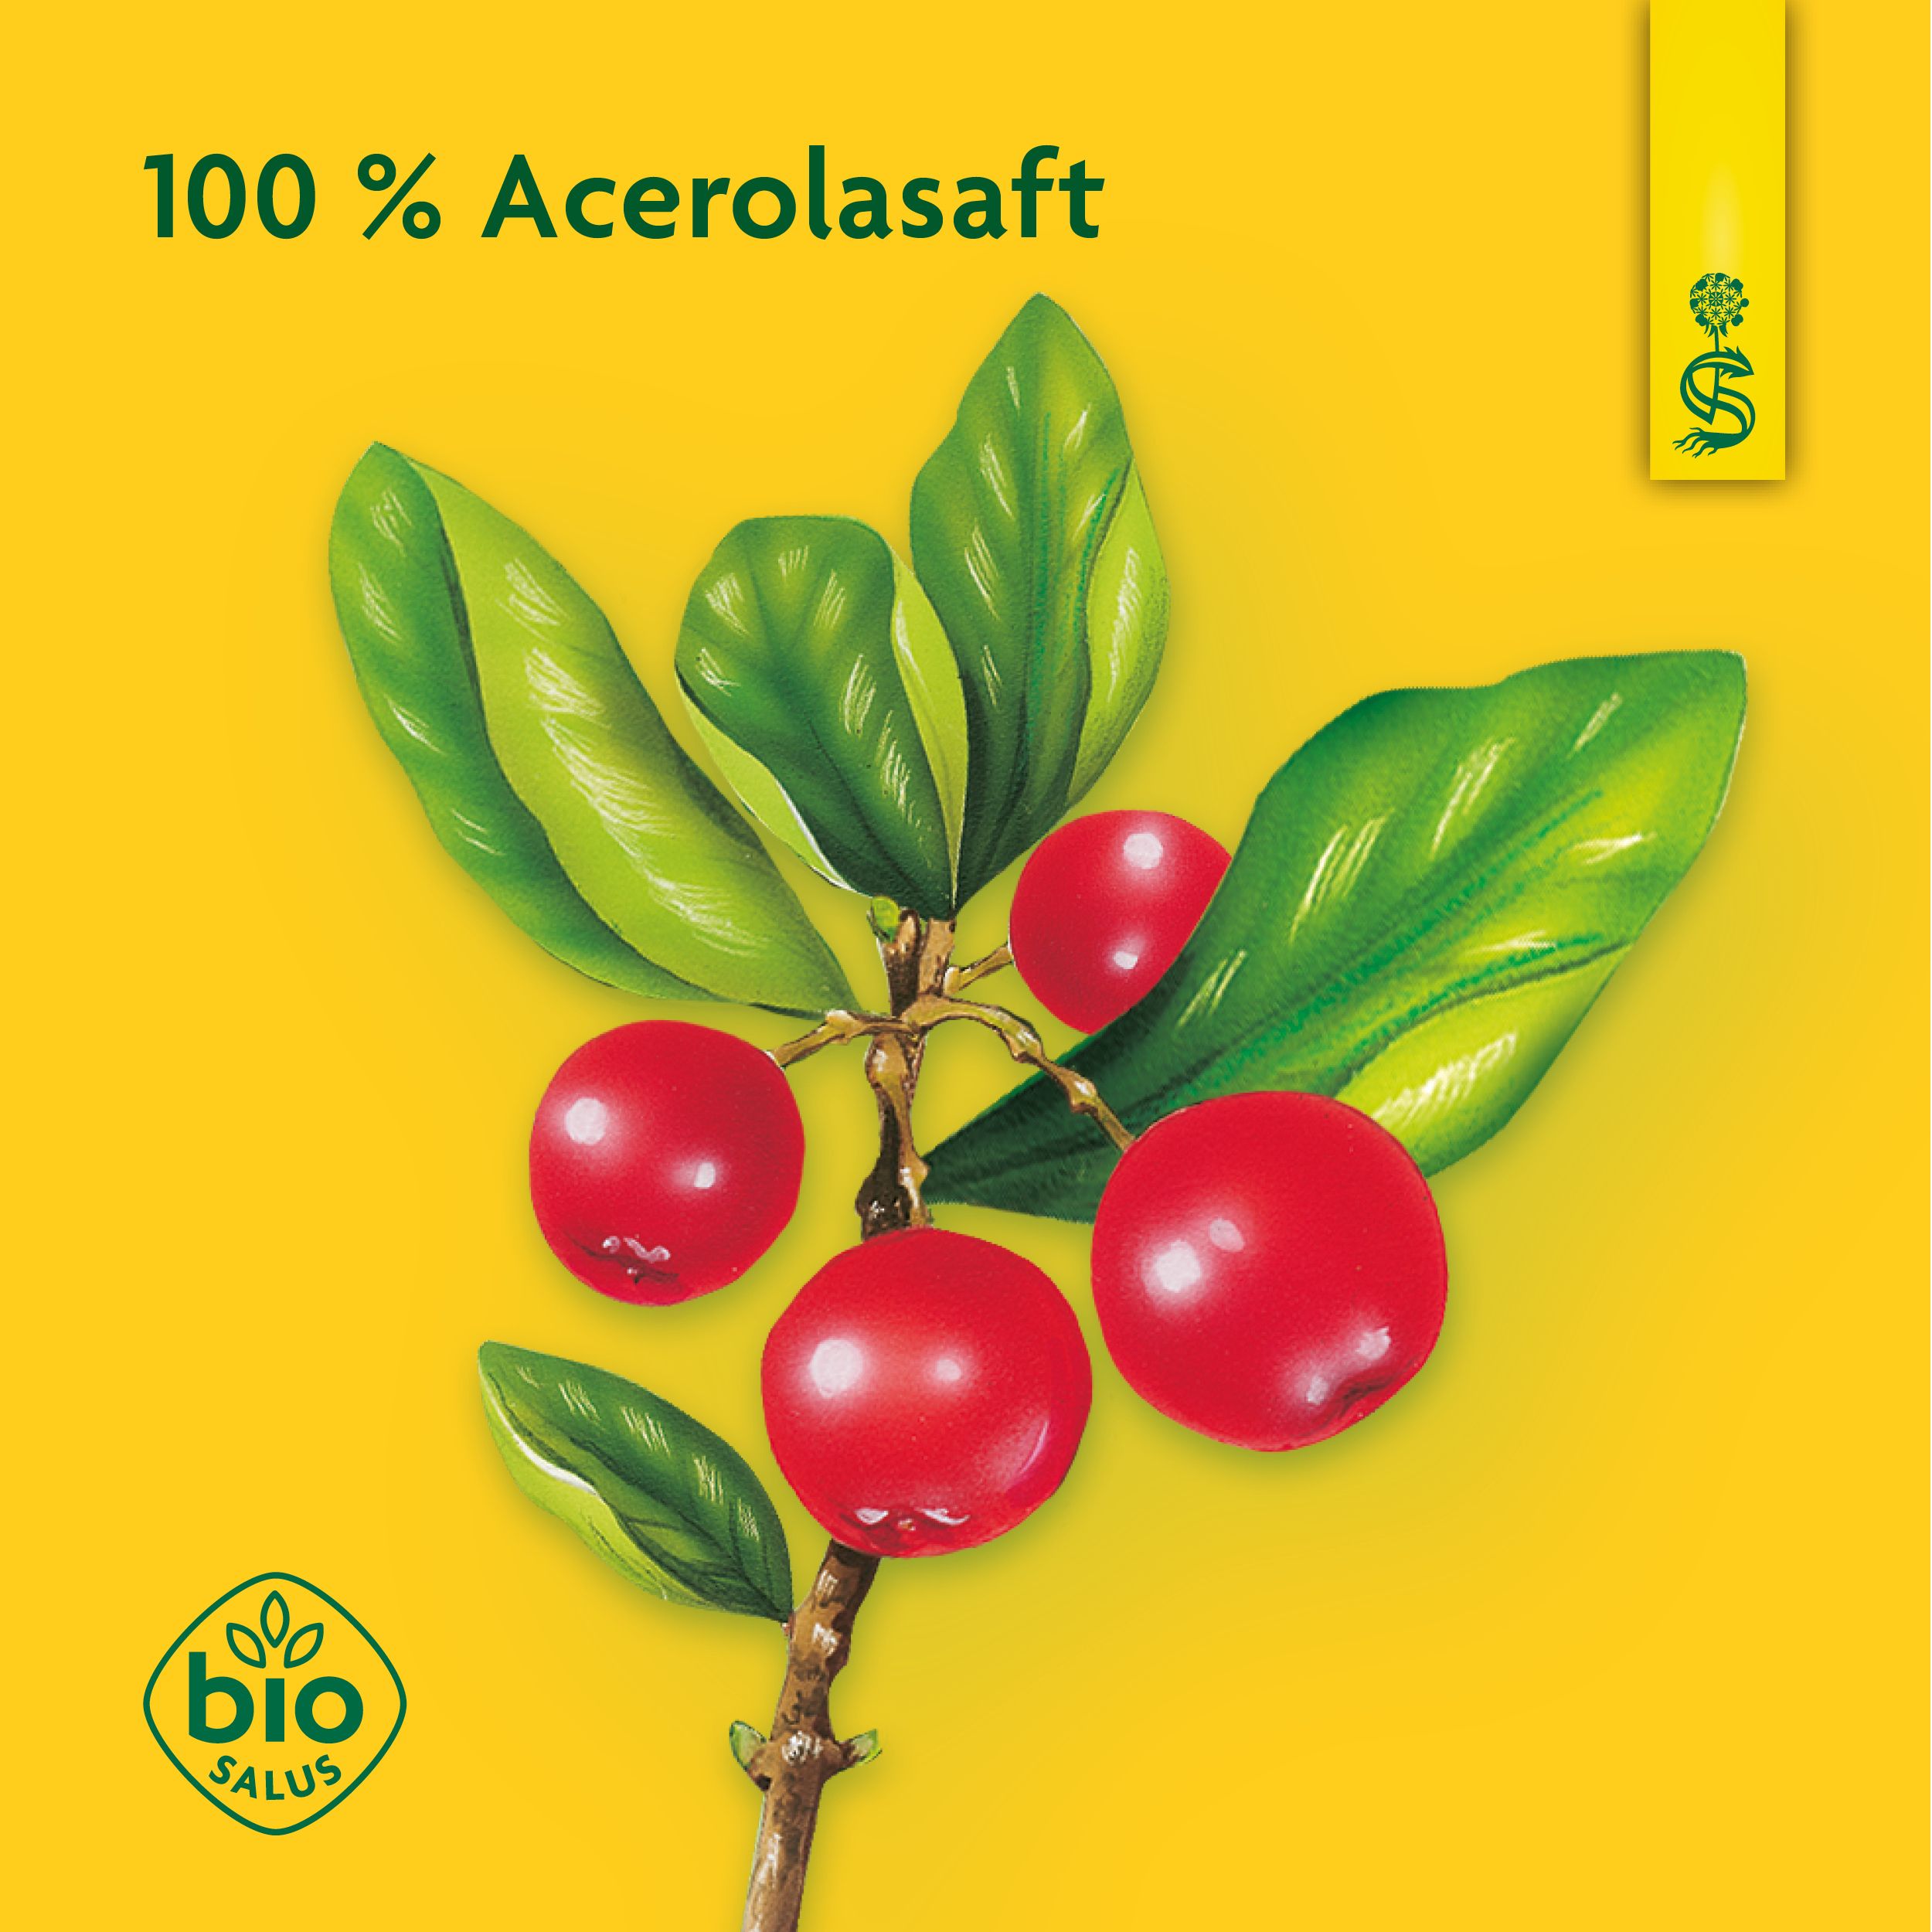 Schoenenberger® Acerola naturtrüber Fruchtsaft